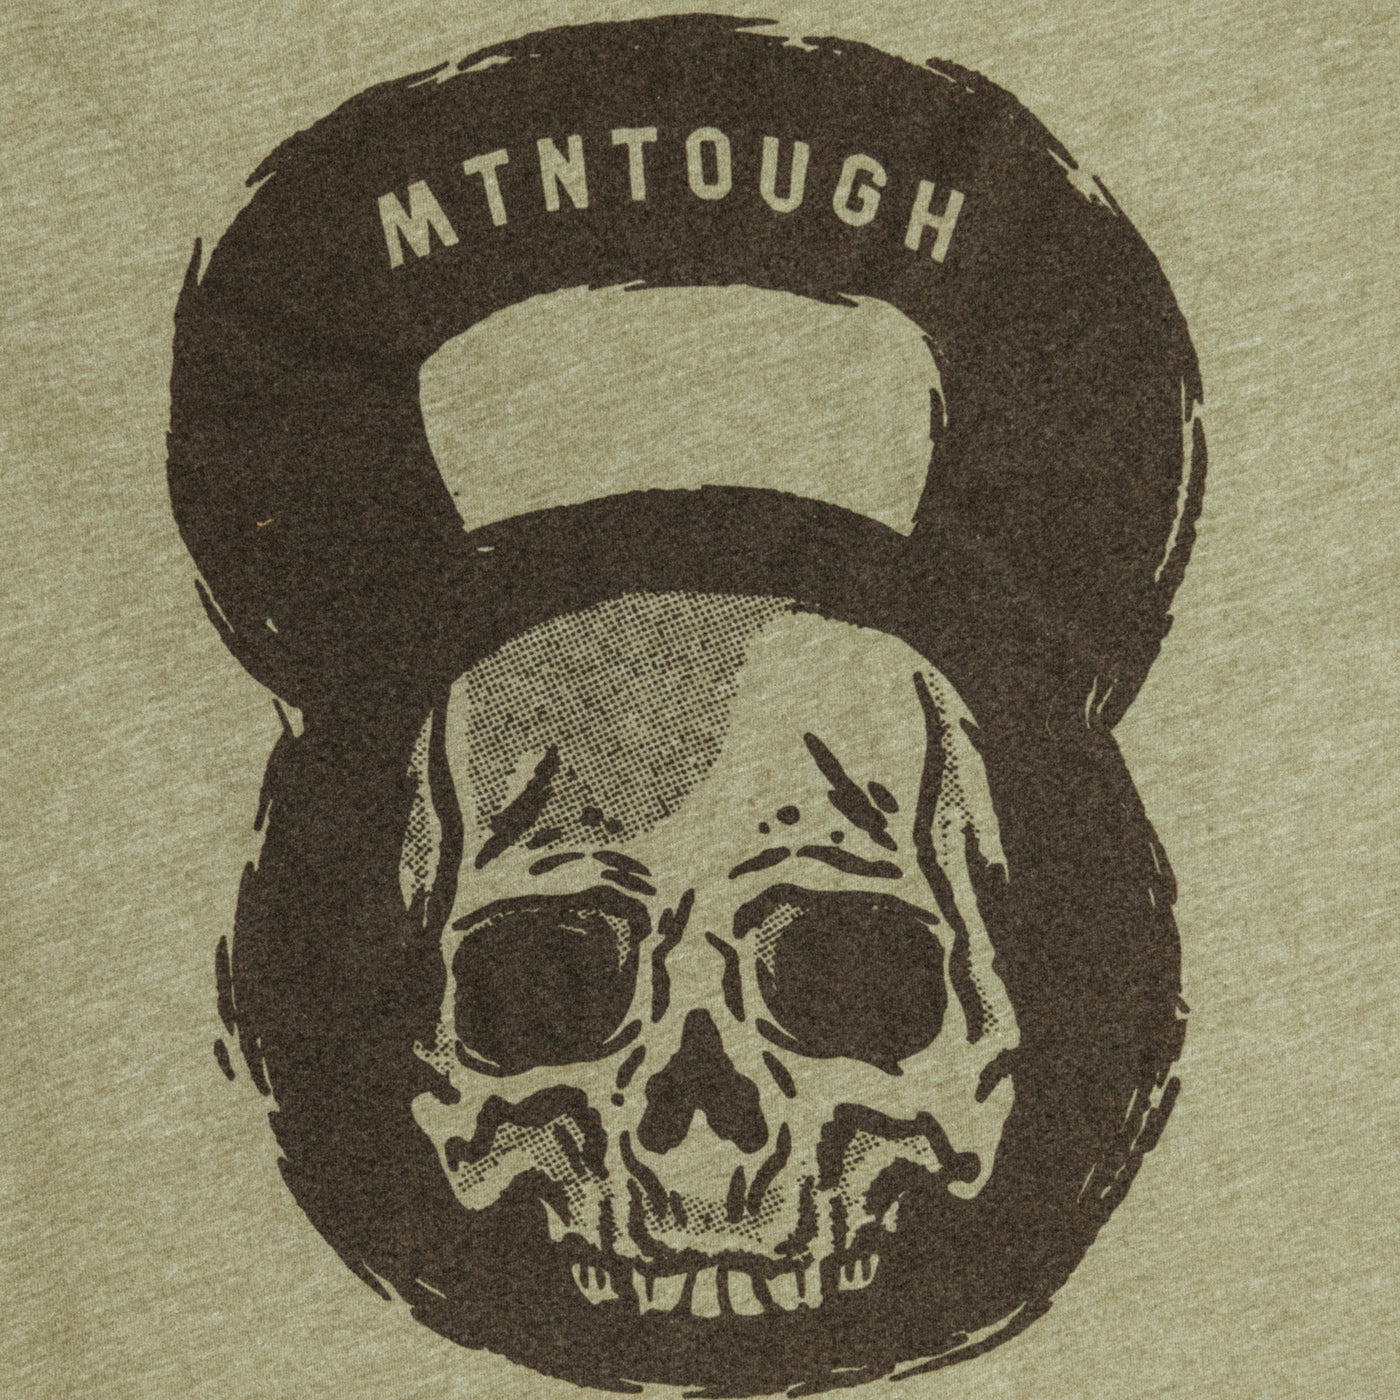 MTNTOUGH "Death by Kettlebell" T-Shirt